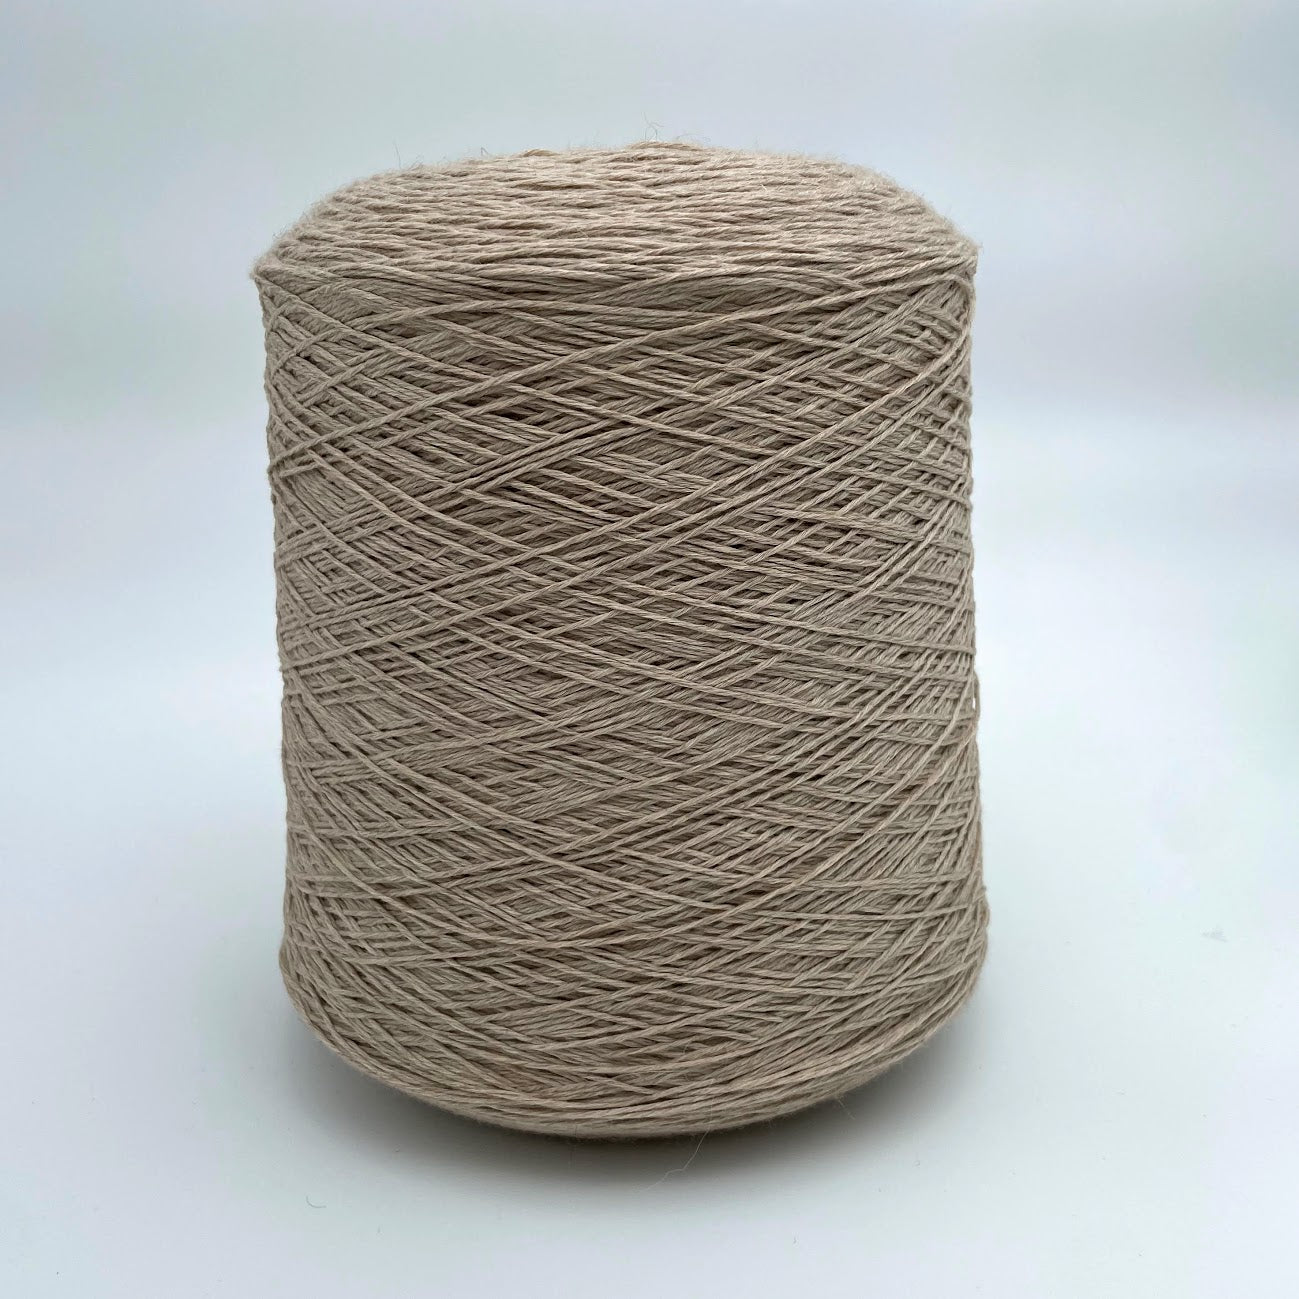 Cashmere Blend Yarn - Deadstock Yarn - Made in Italy -  Beige - Fingering Weight  - 100g